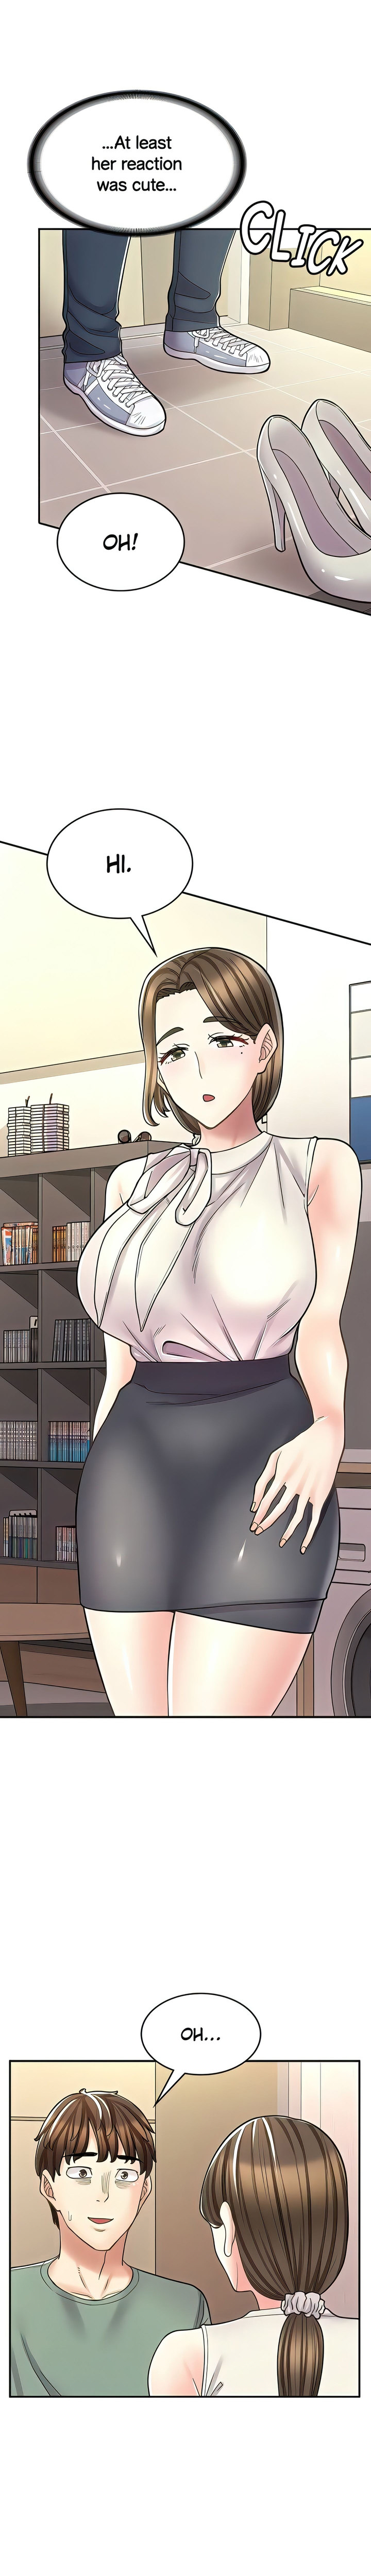 Erotic Manga Café Girls - Chapter 34 Page 1